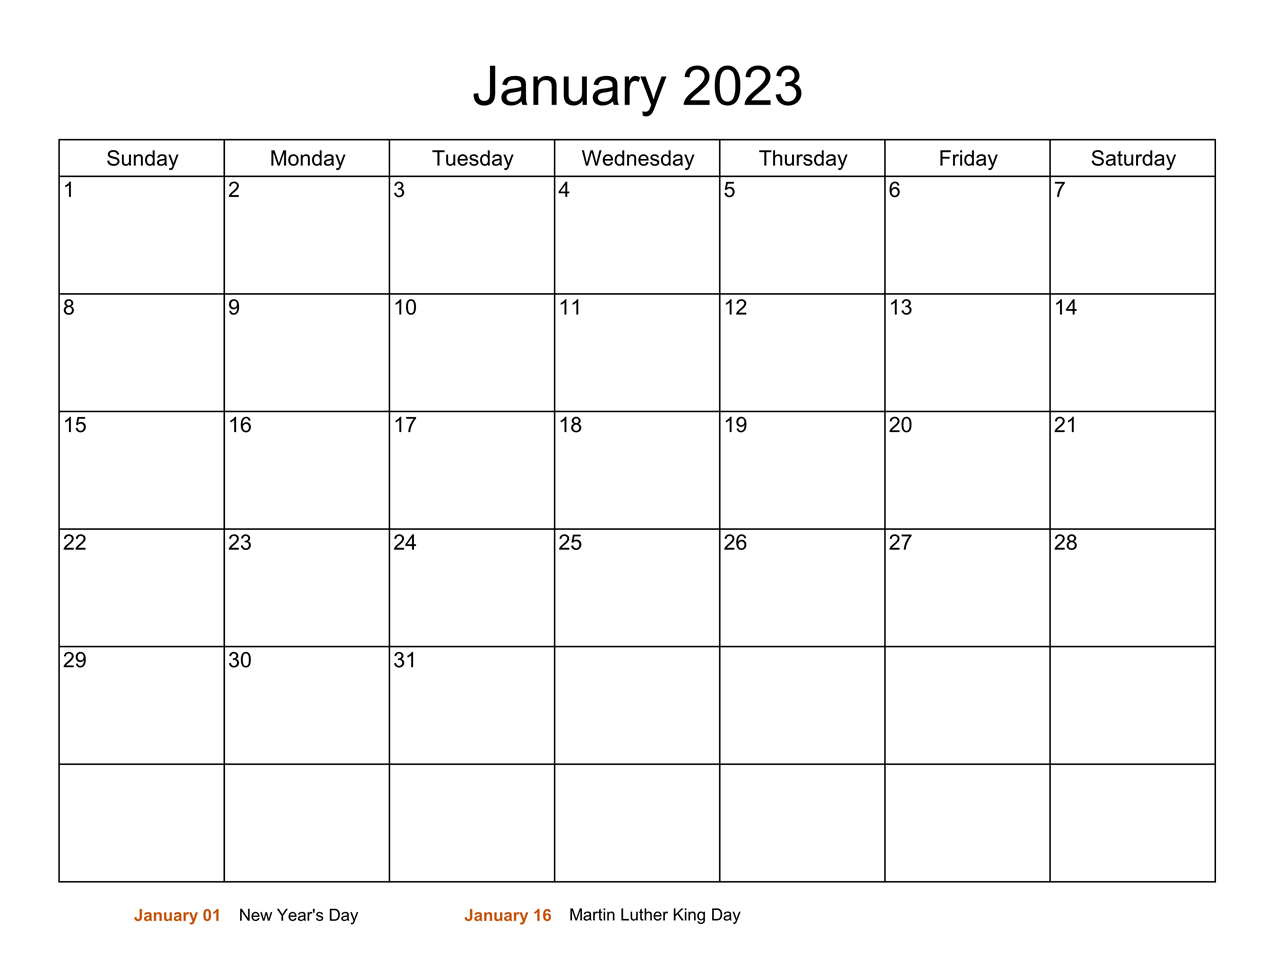 Printable January 2023 Calendar With Holidays